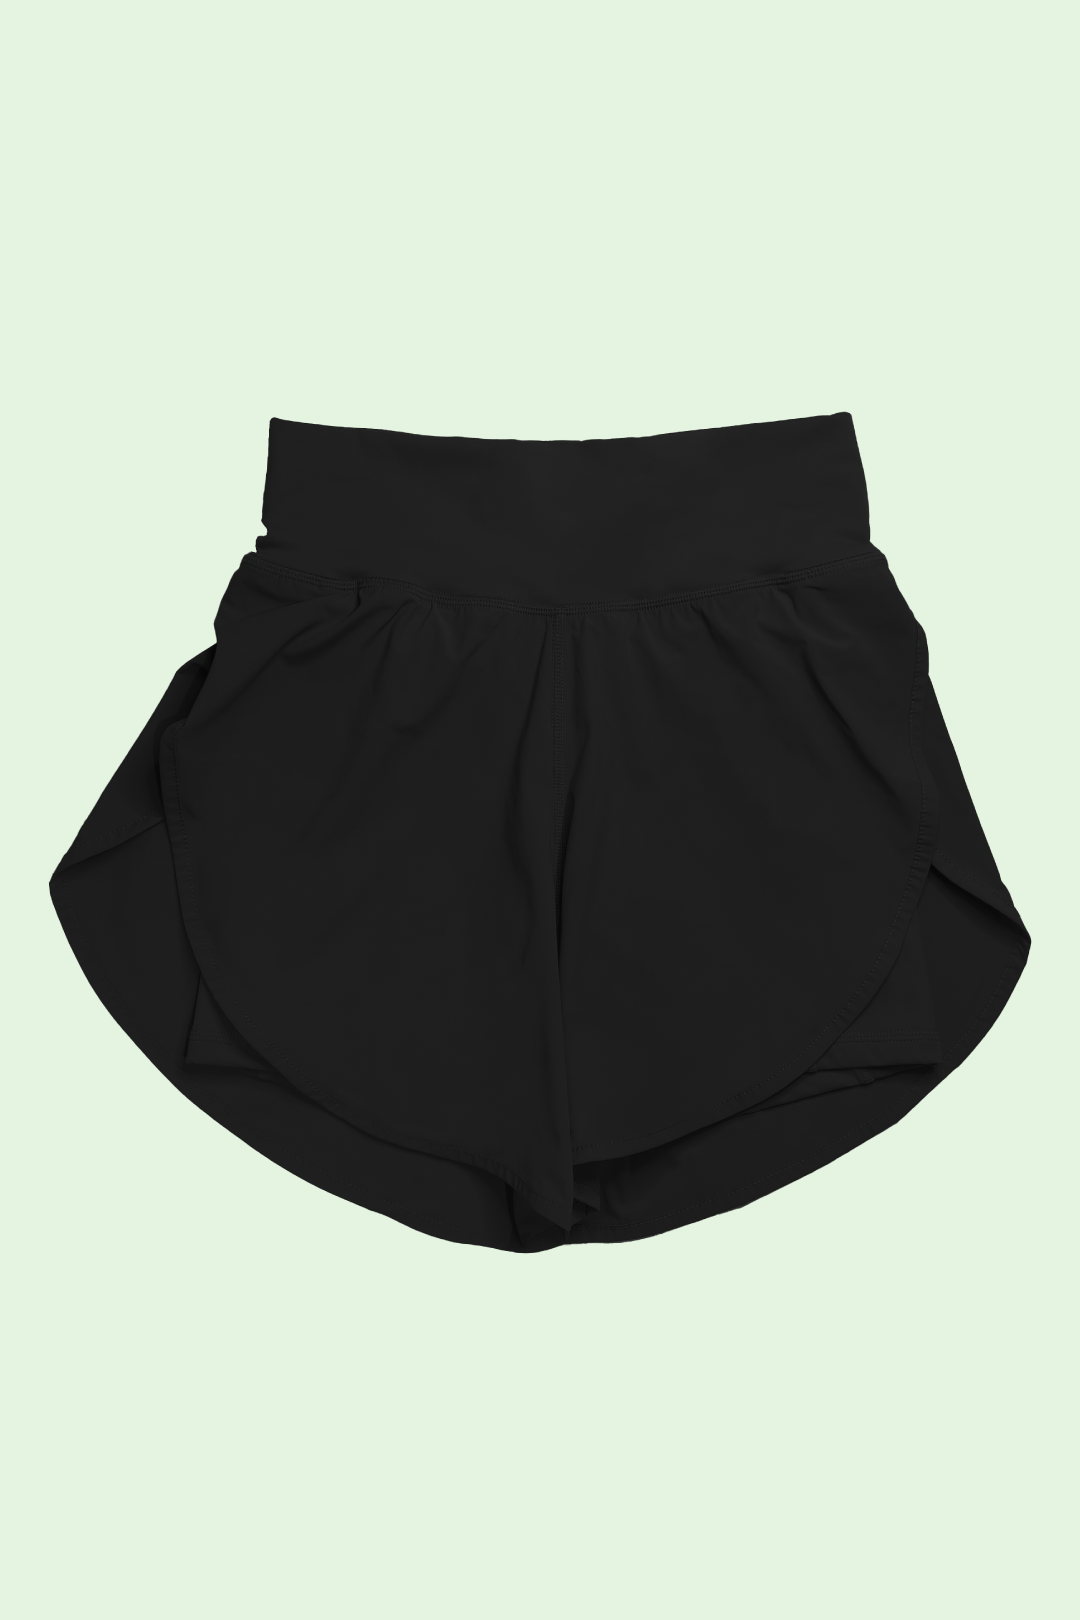 Run Shorts (Long 4.5") in Black Sesame